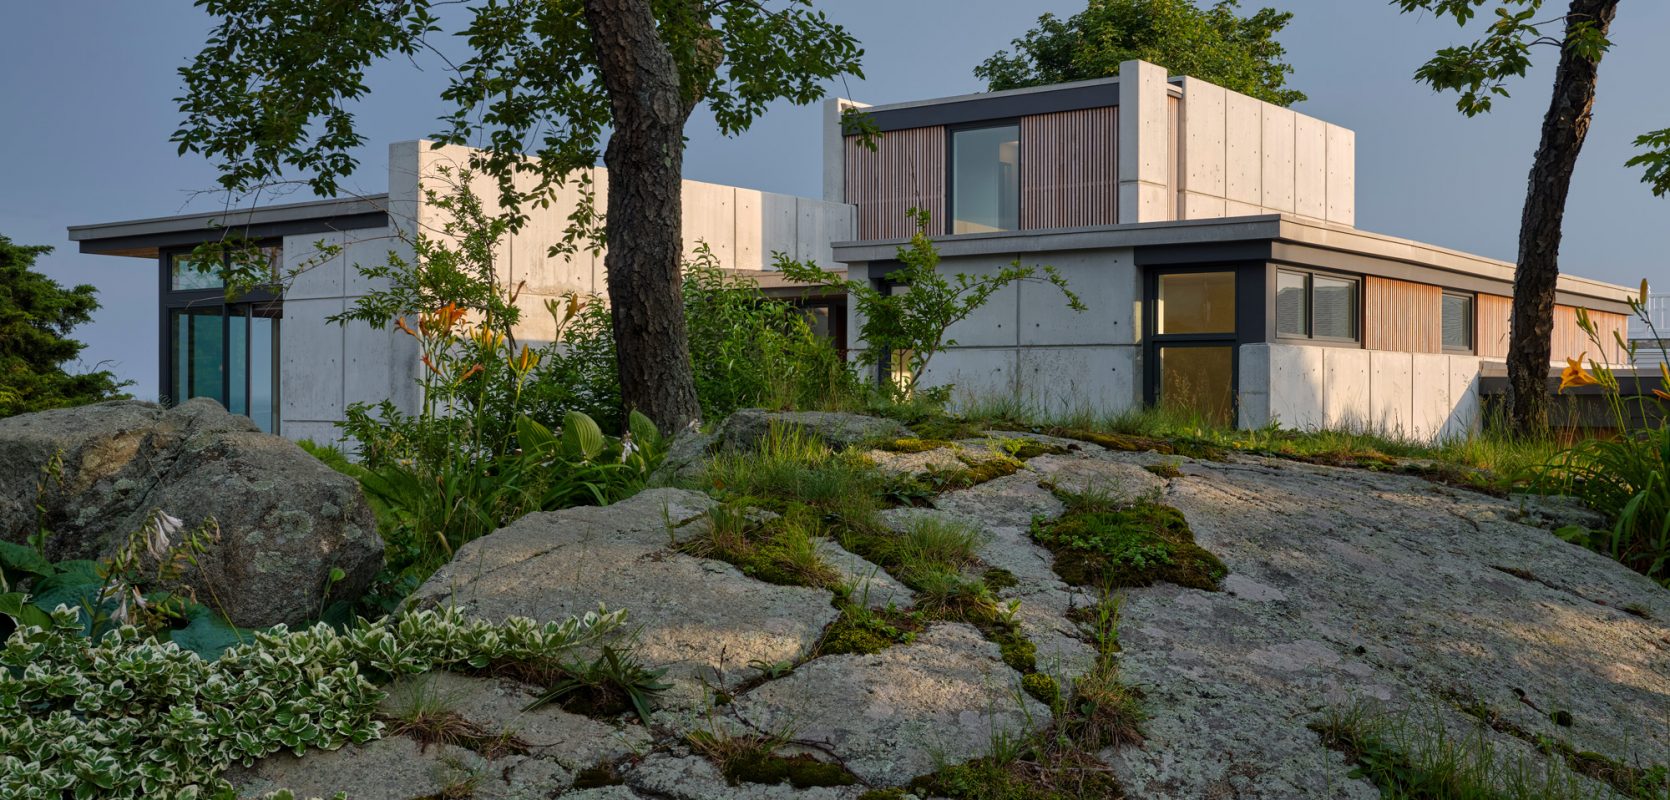 concrete home nestled into landscape with ledge